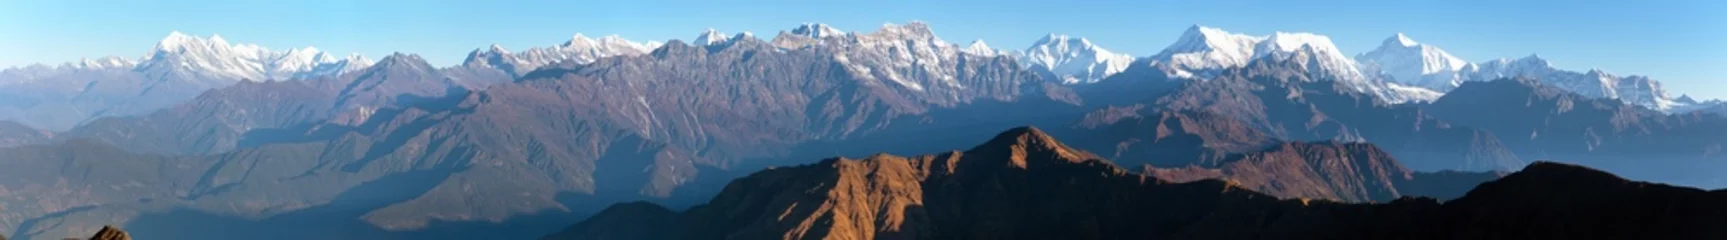 Photo sur Plexiglas Makalu mounts Everest Lhotse and Makalu great himalayan range